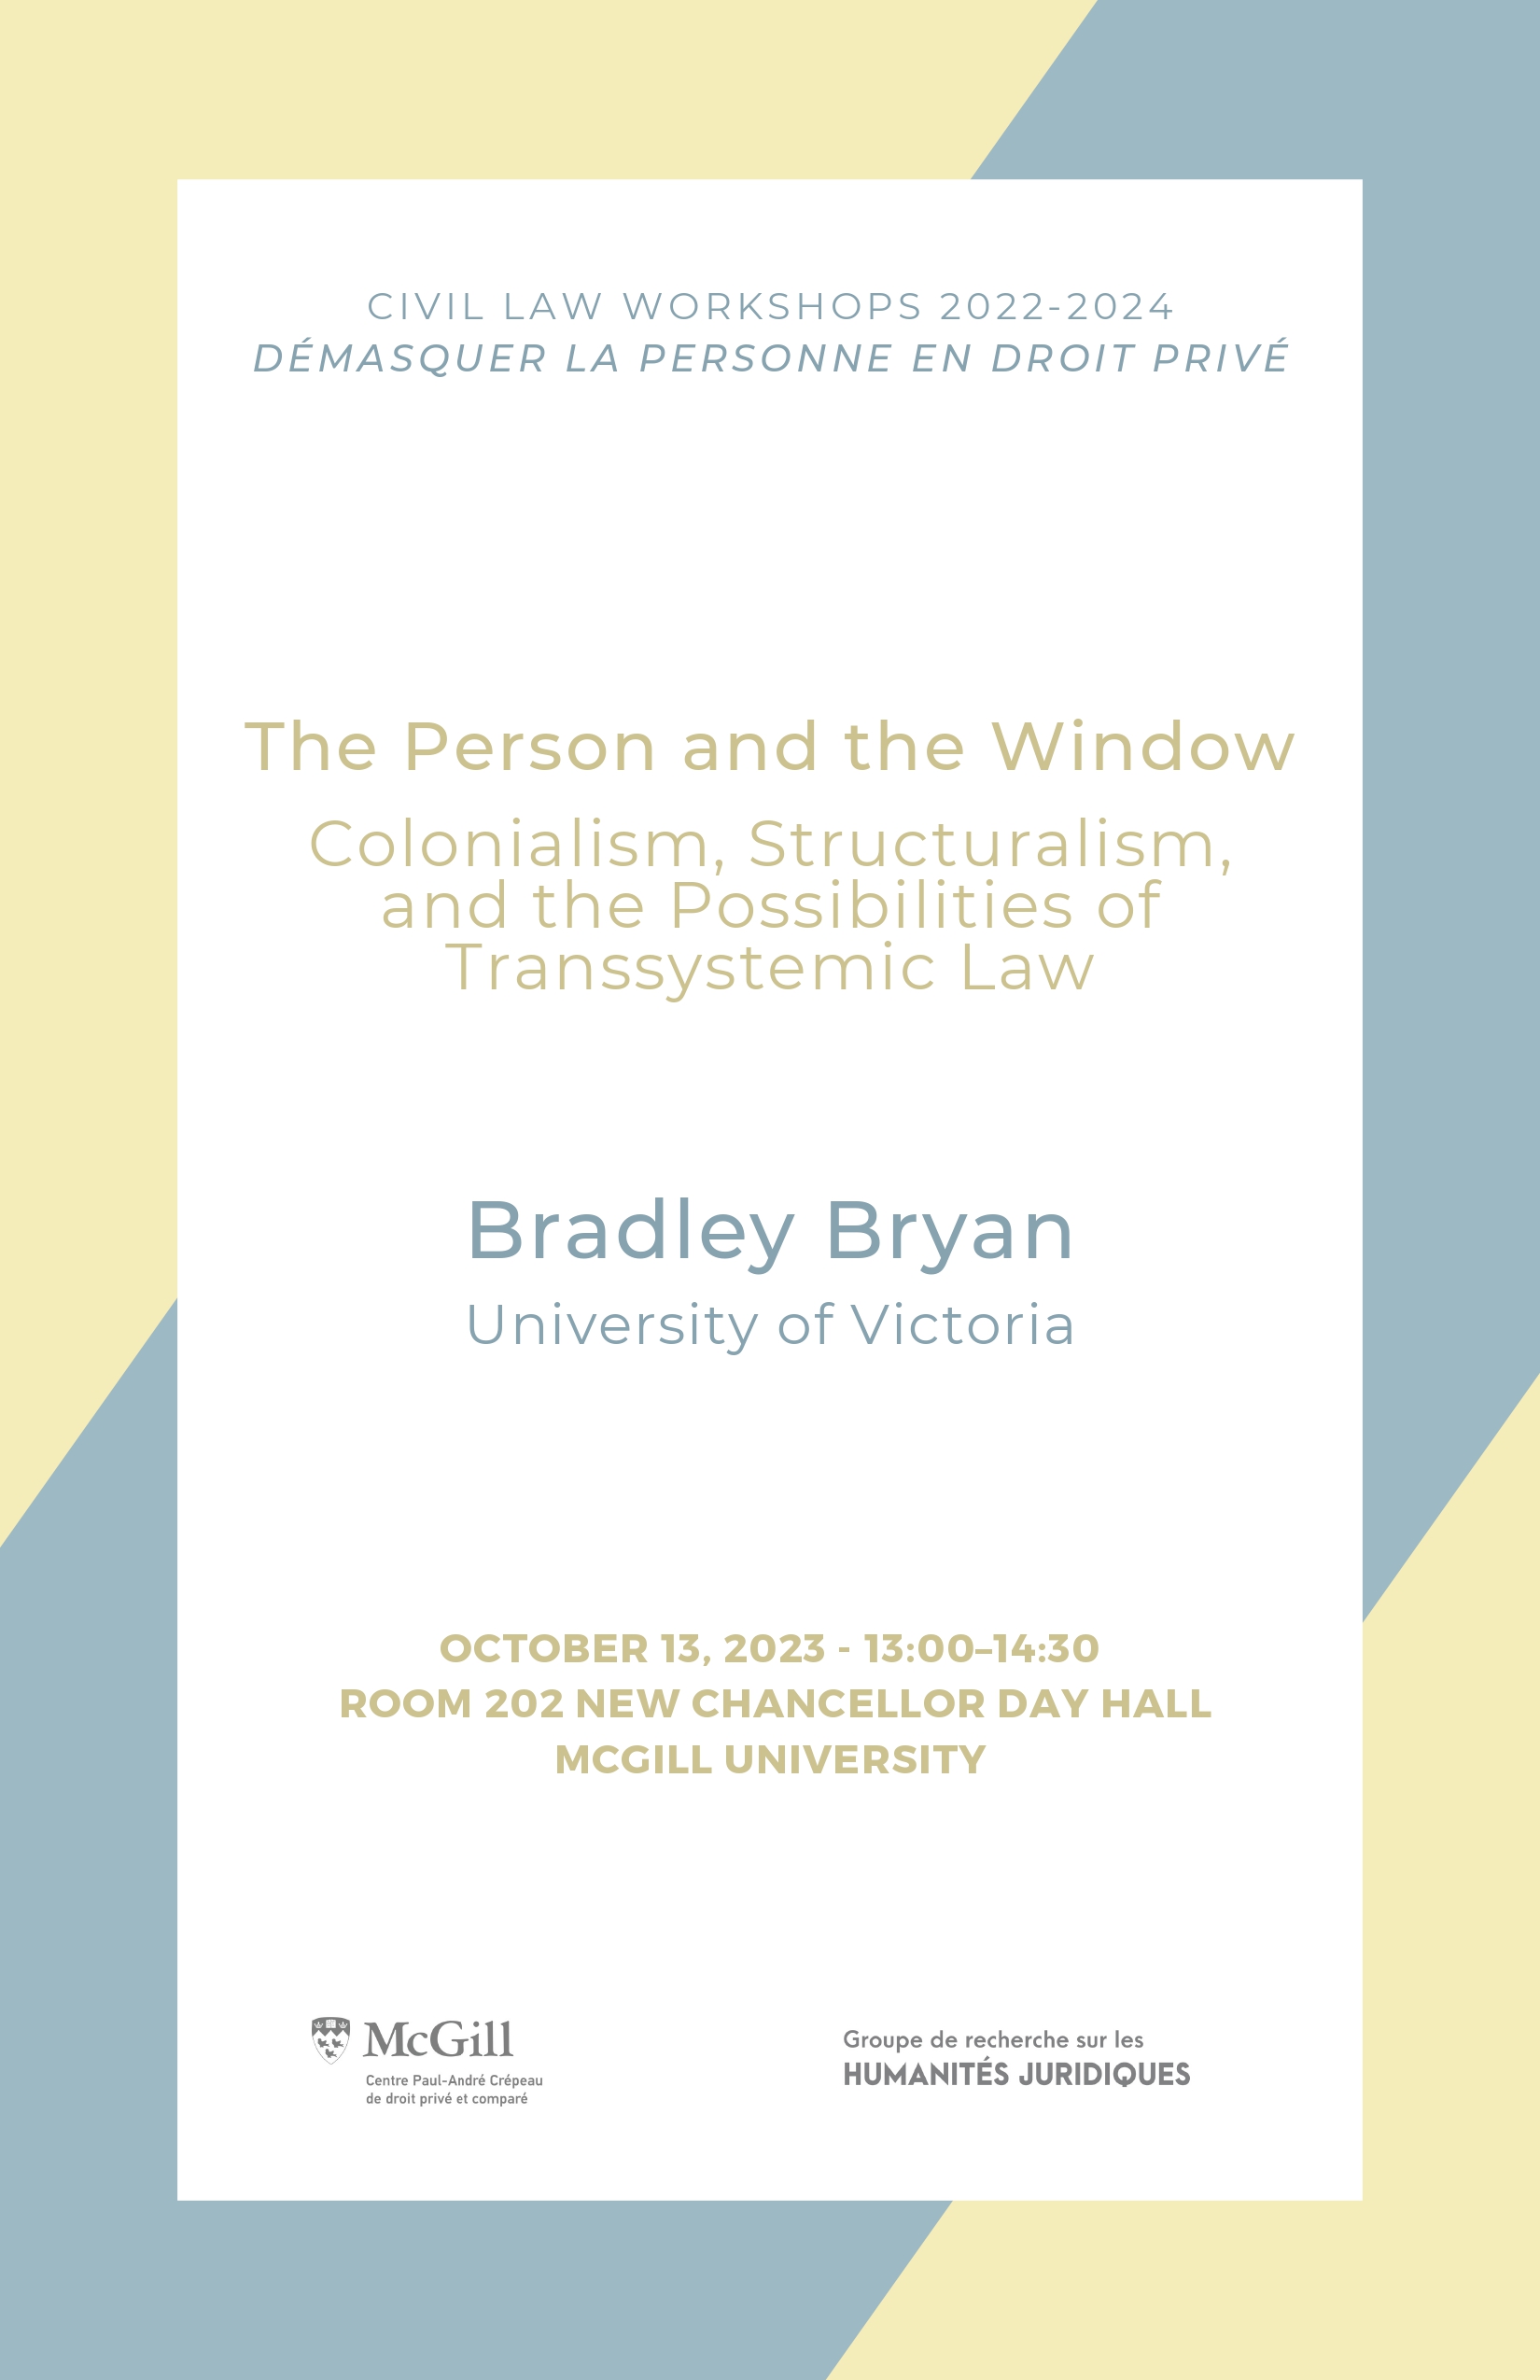 Bradley Brian event flyer